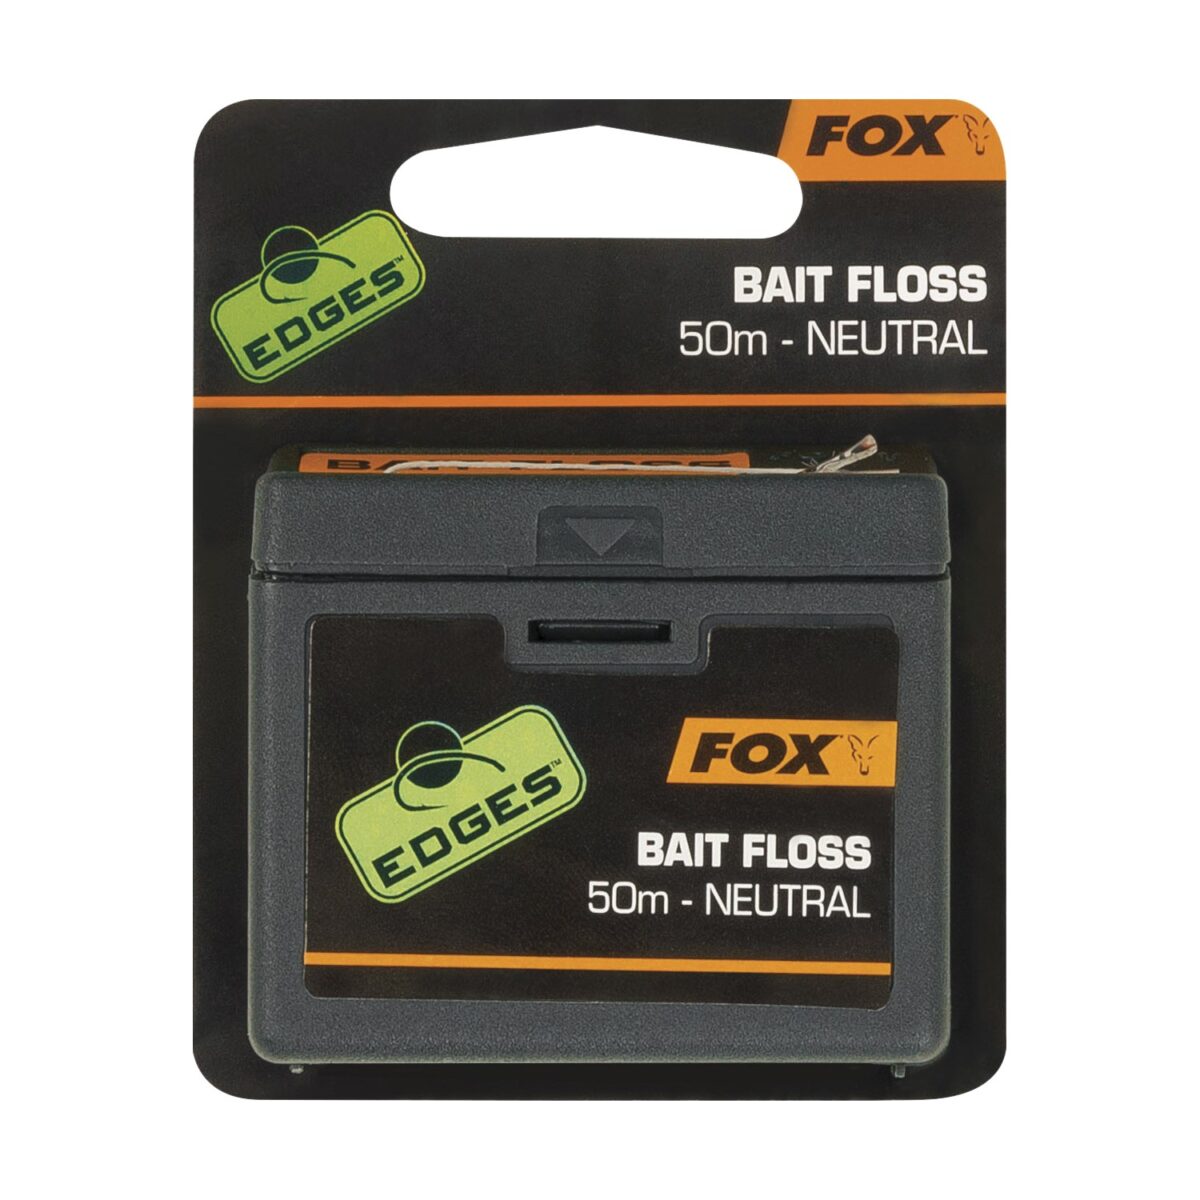 Конец за стръв Fox Edges Bait Floss Neutral 50m